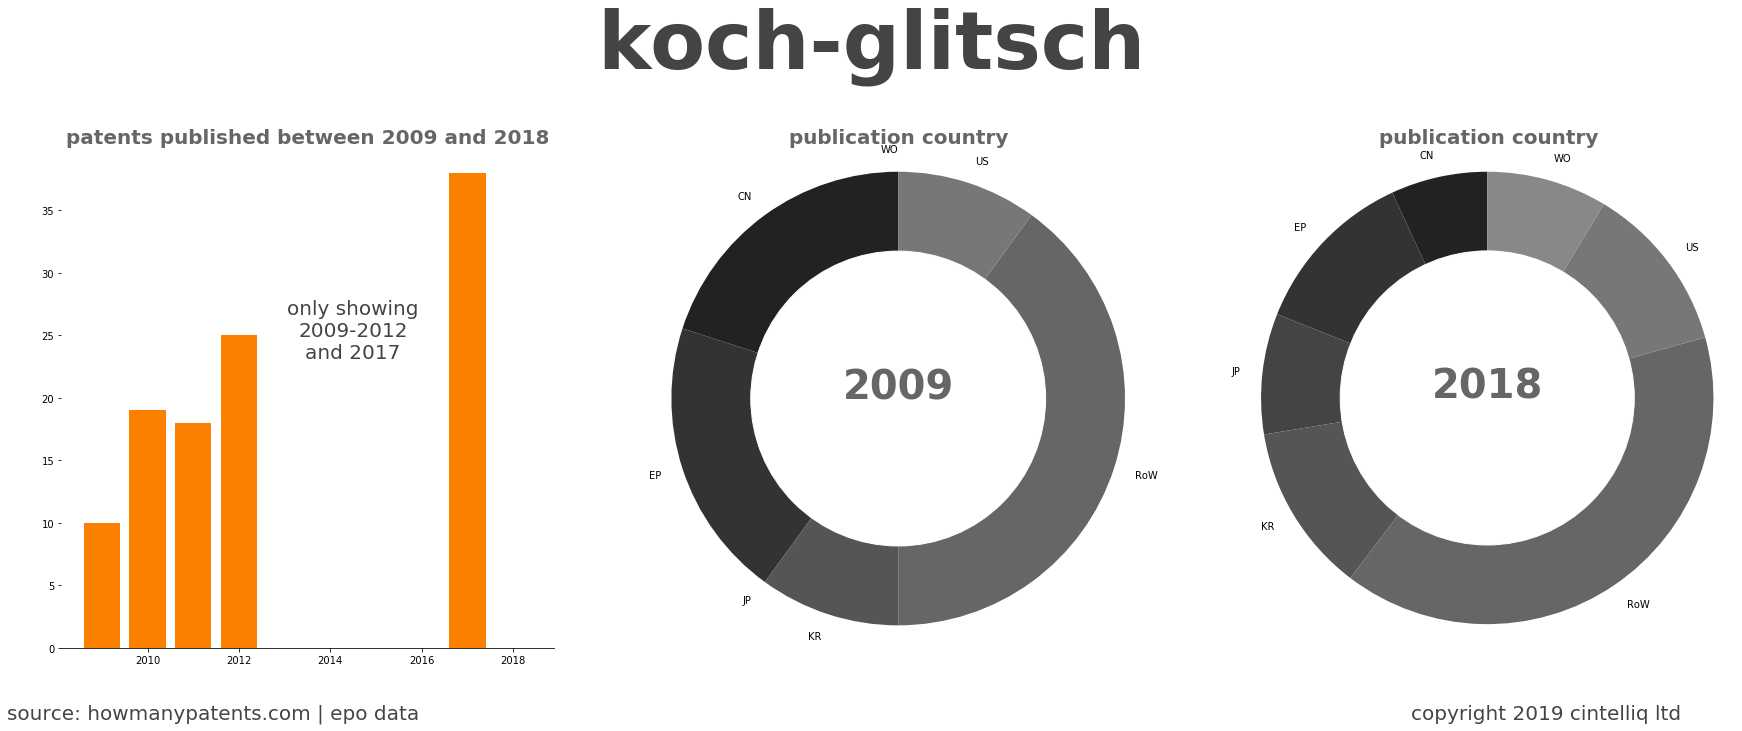 summary of patents for Koch-Glitsch